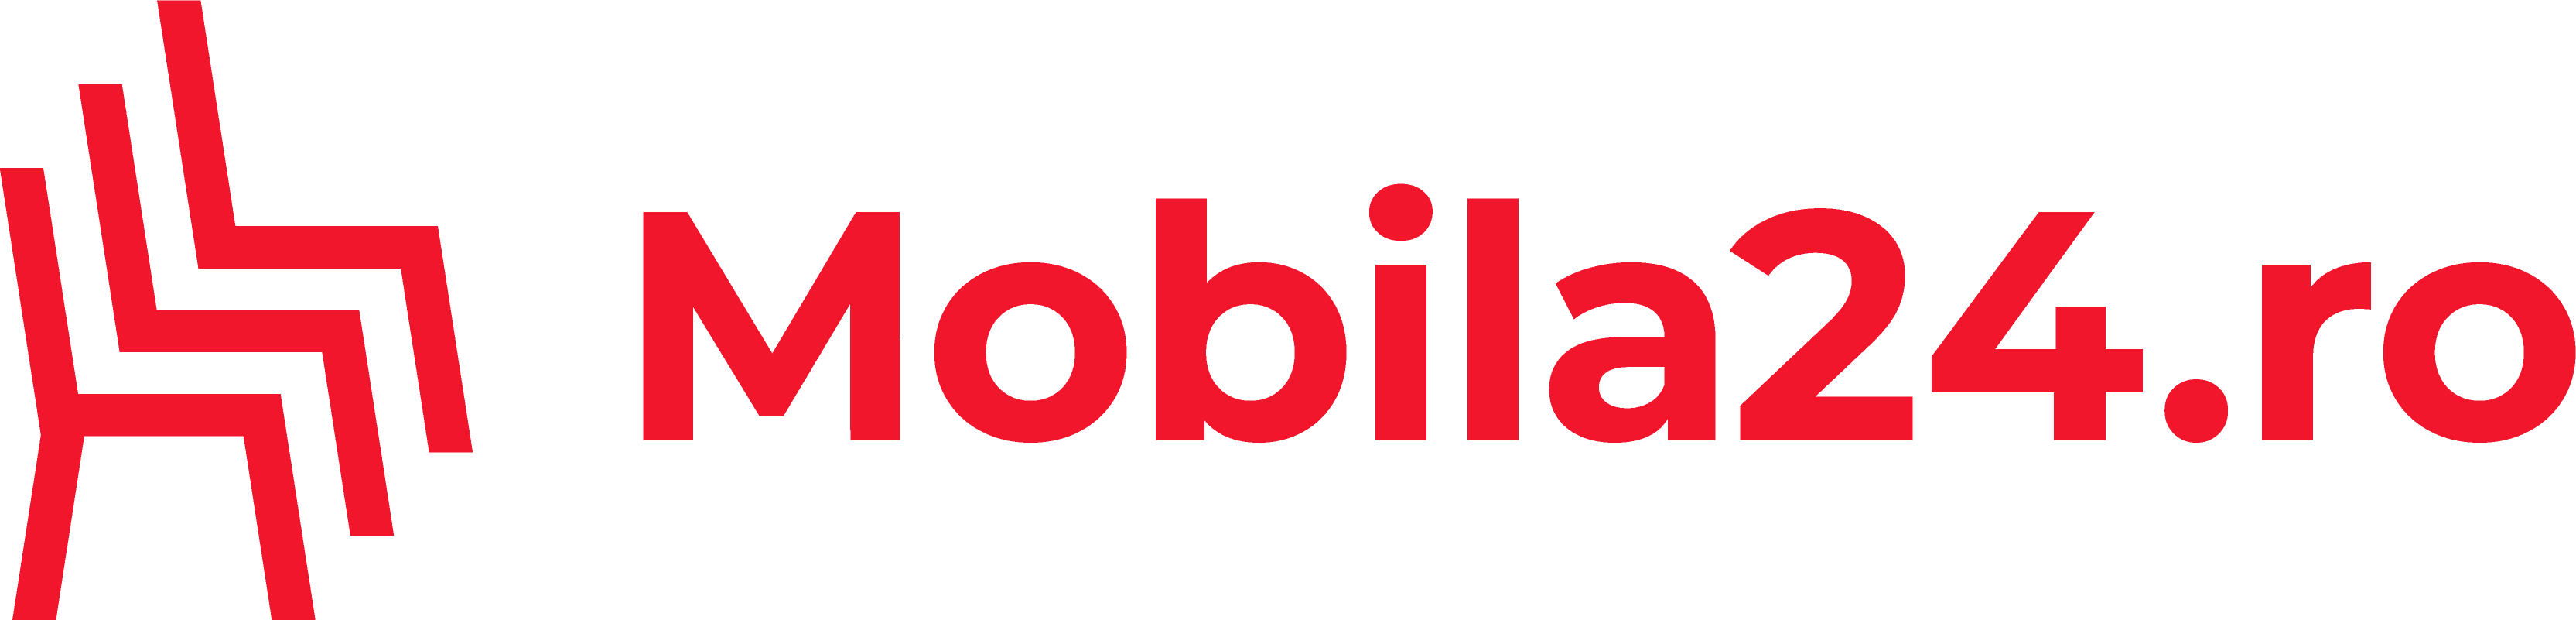 Logo Mobila24.ro